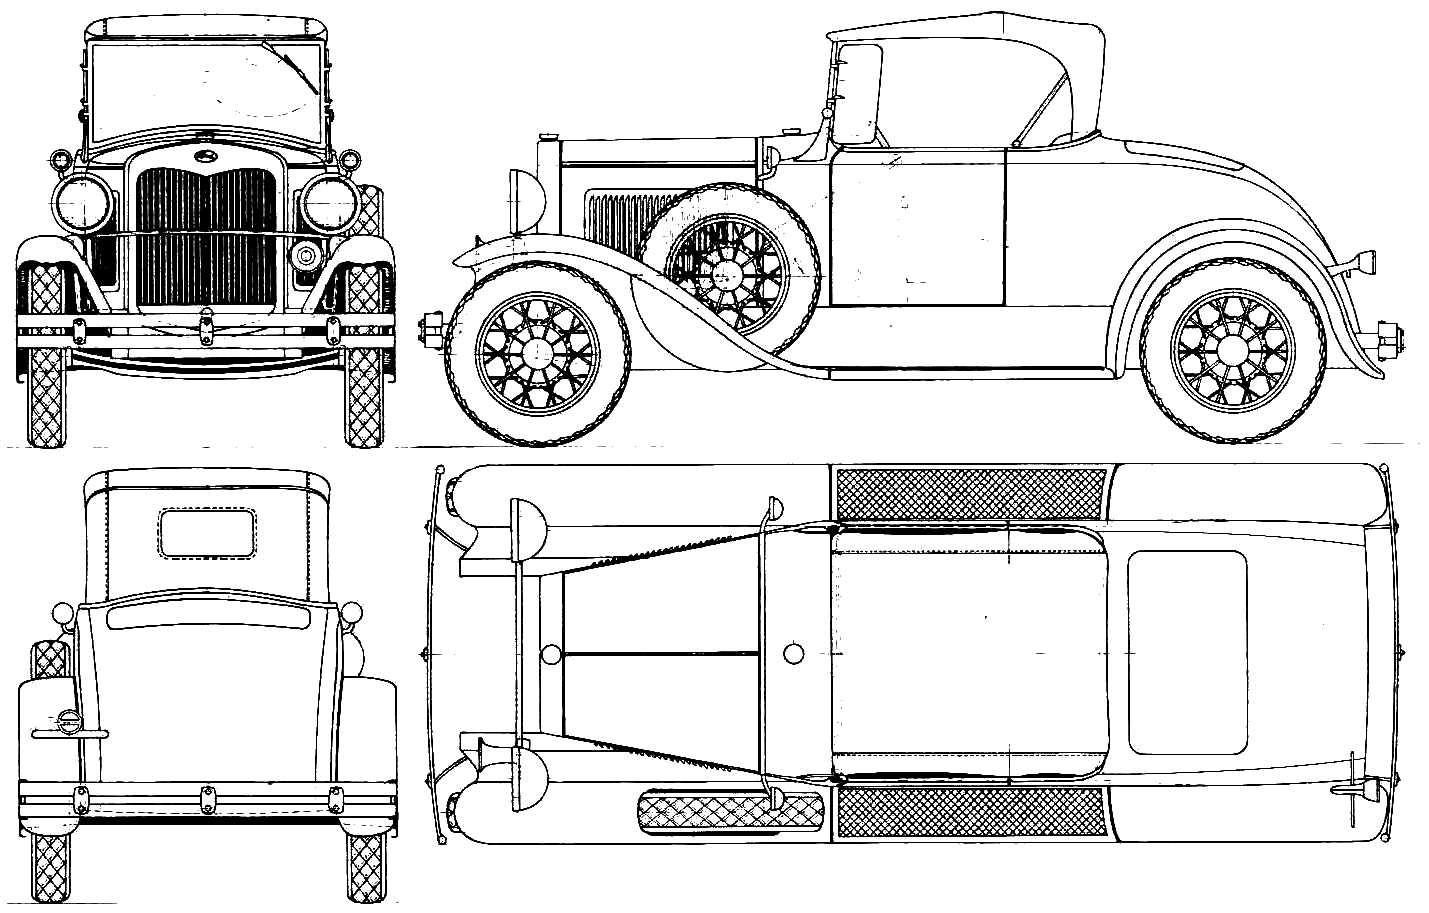 Ford Model A blueprint